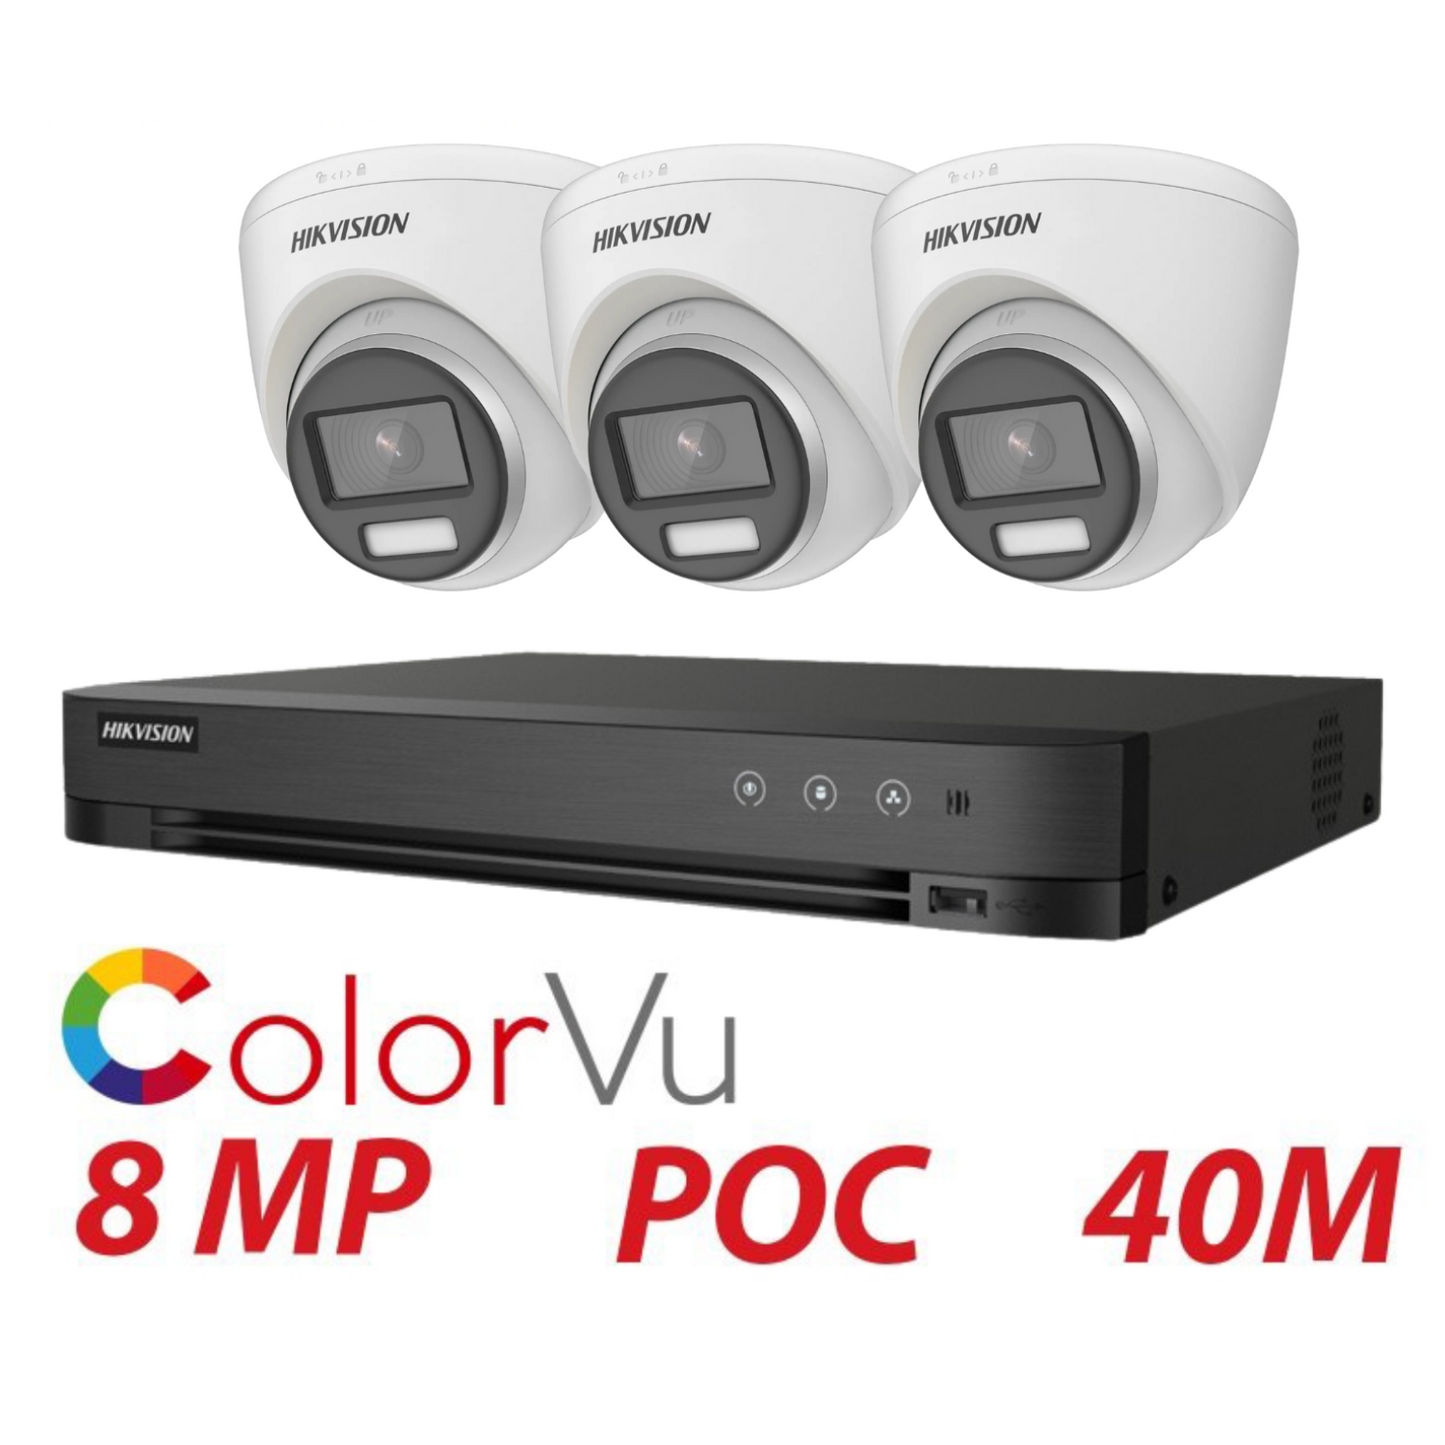 8MP 4CH Hikvision ColorVu System 3X 24HR Color POC DVR Camera Kit